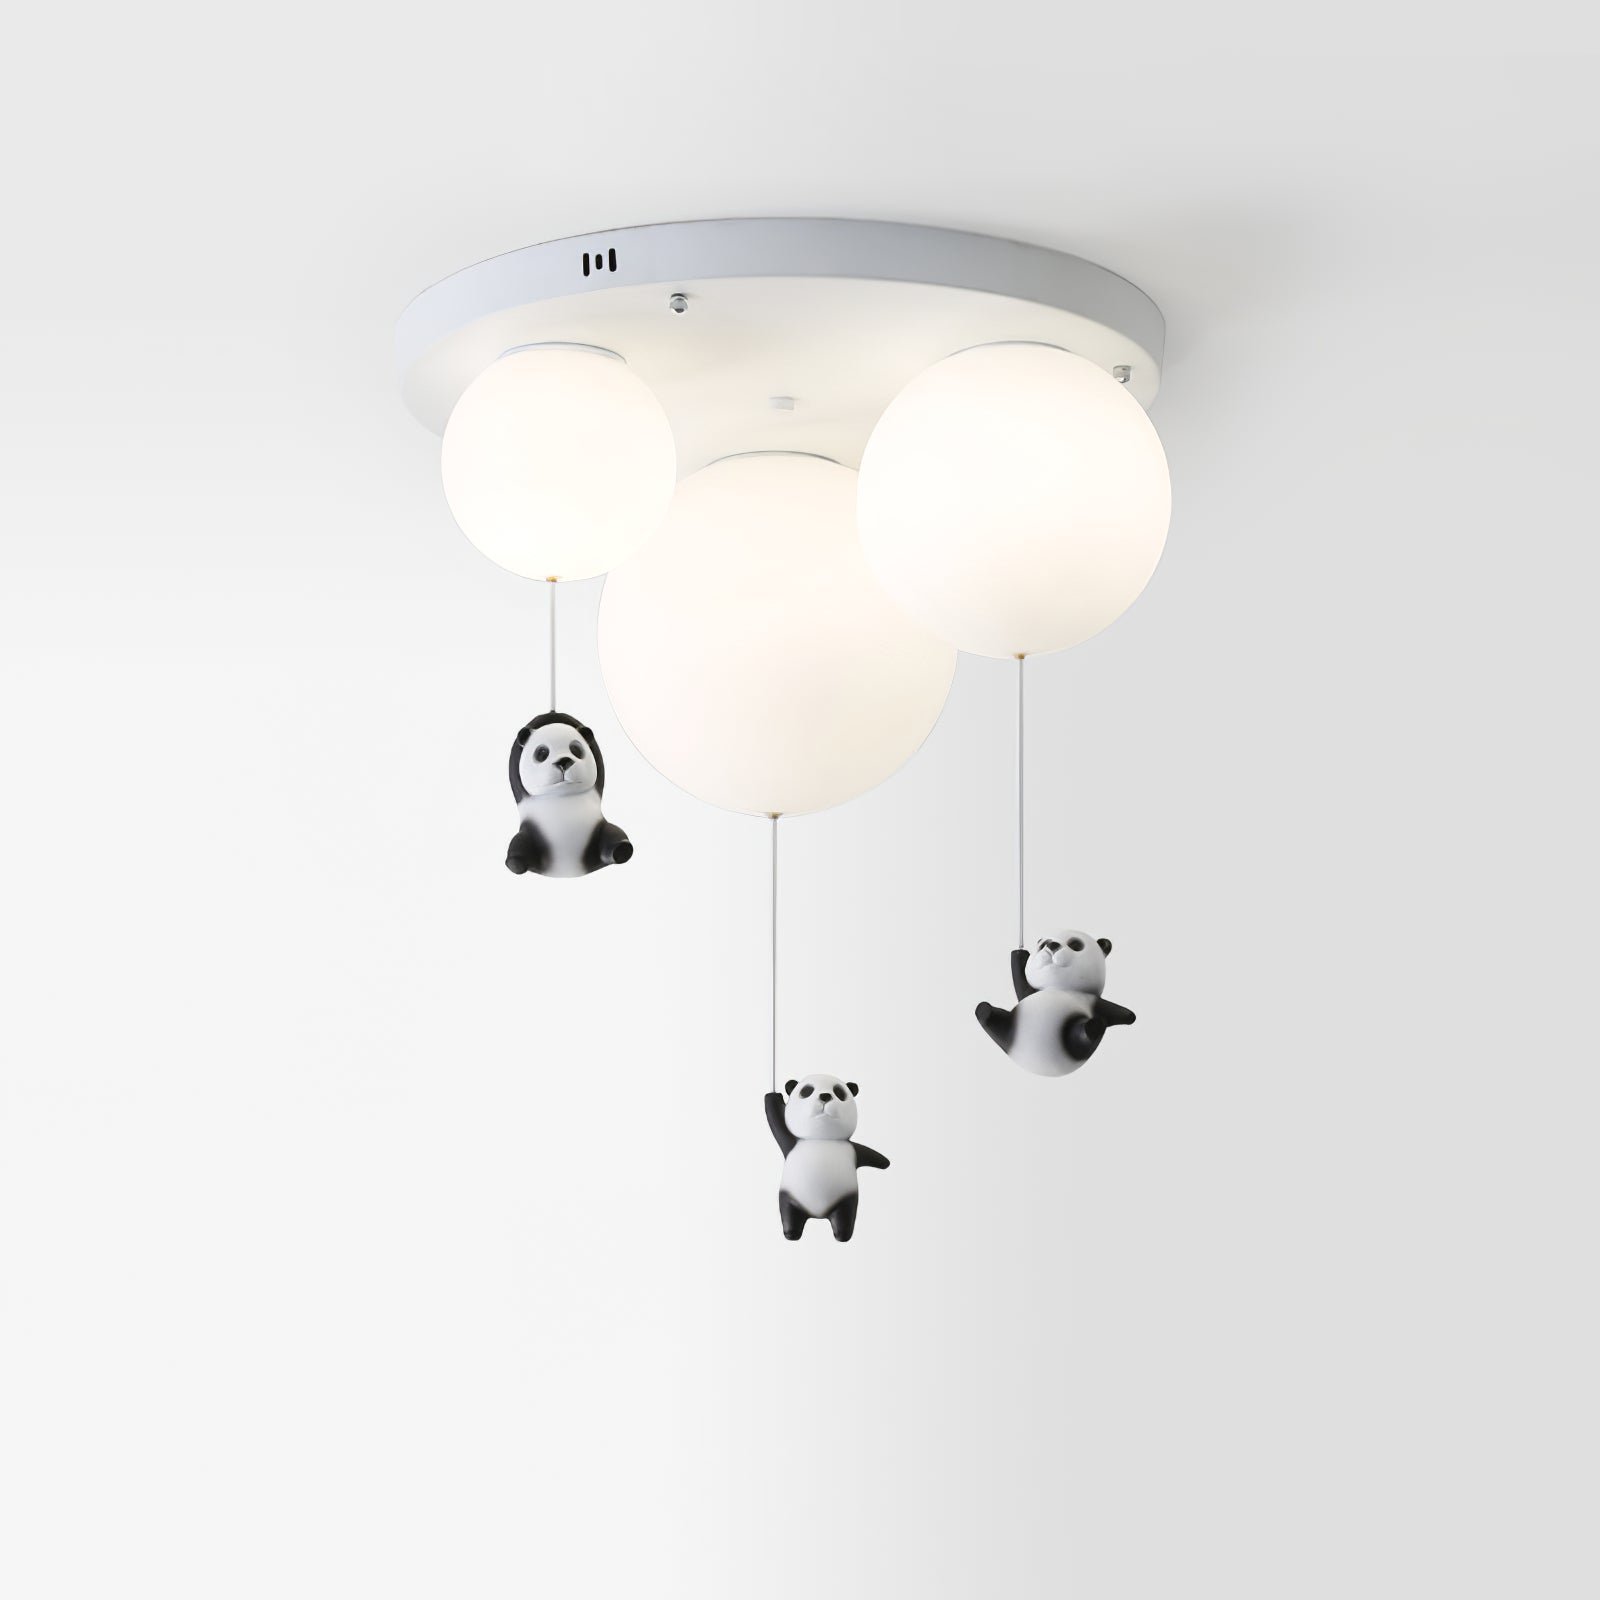 White Panda Ceiling Lamp with 3 Heads, measuring 19.6" in Diameter (50cm)